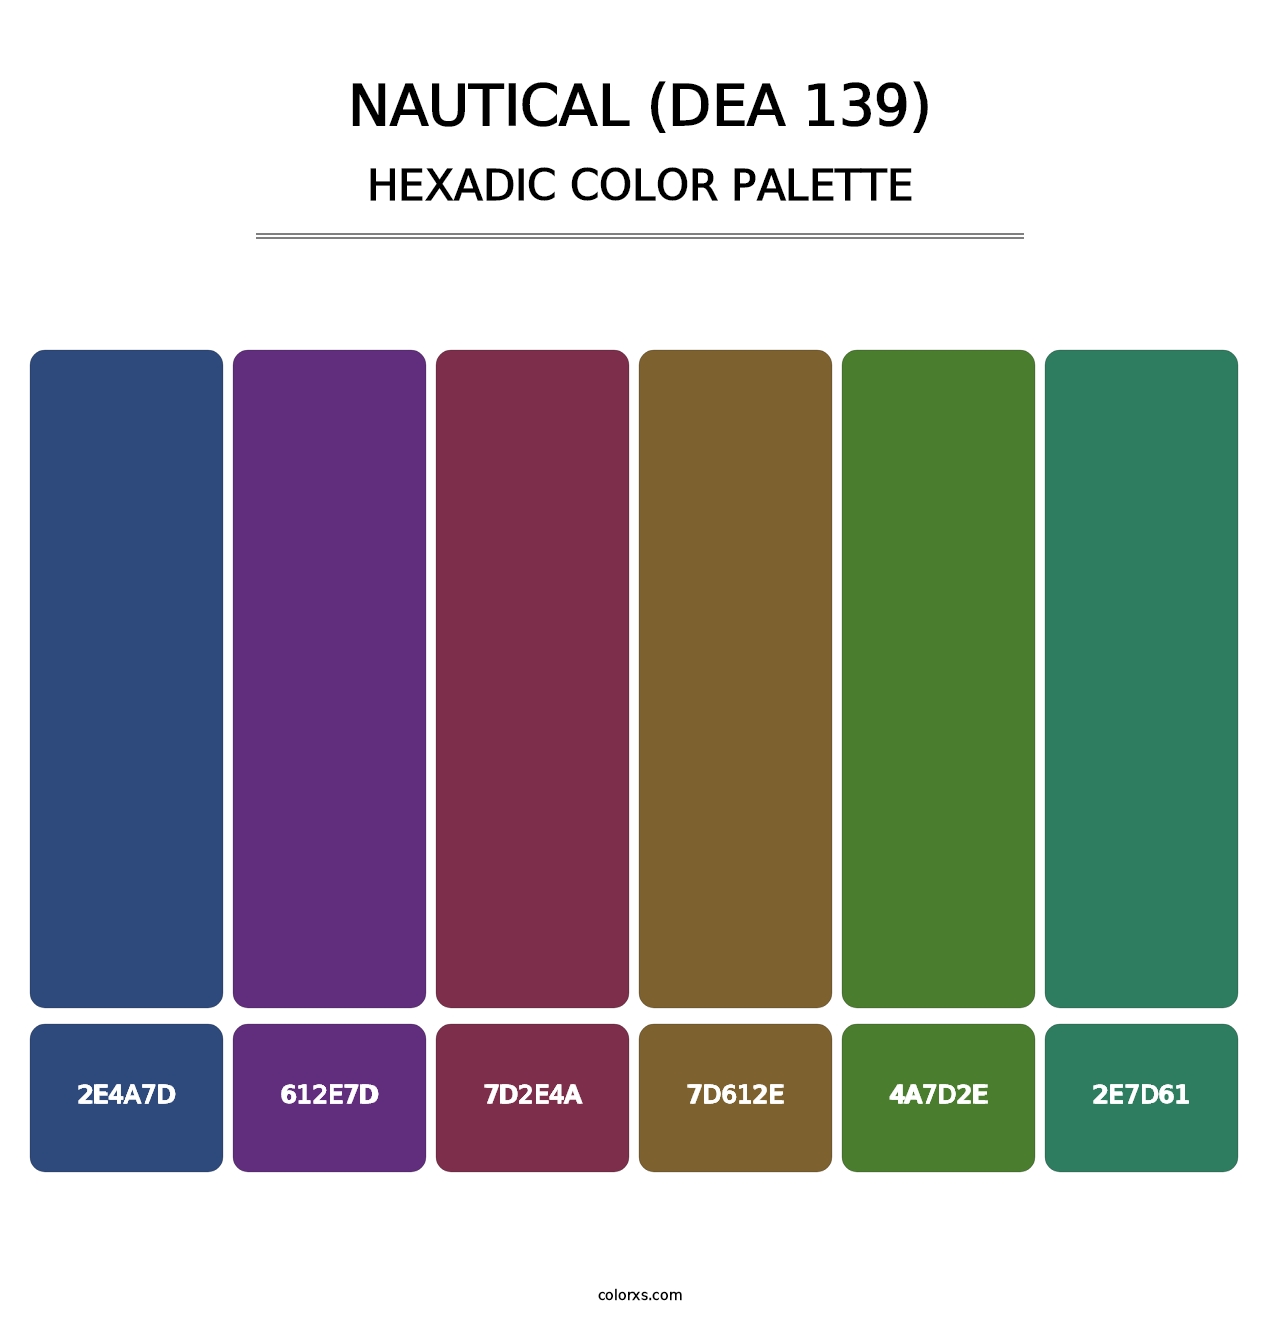 Nautical (DEA 139) - Hexadic Color Palette